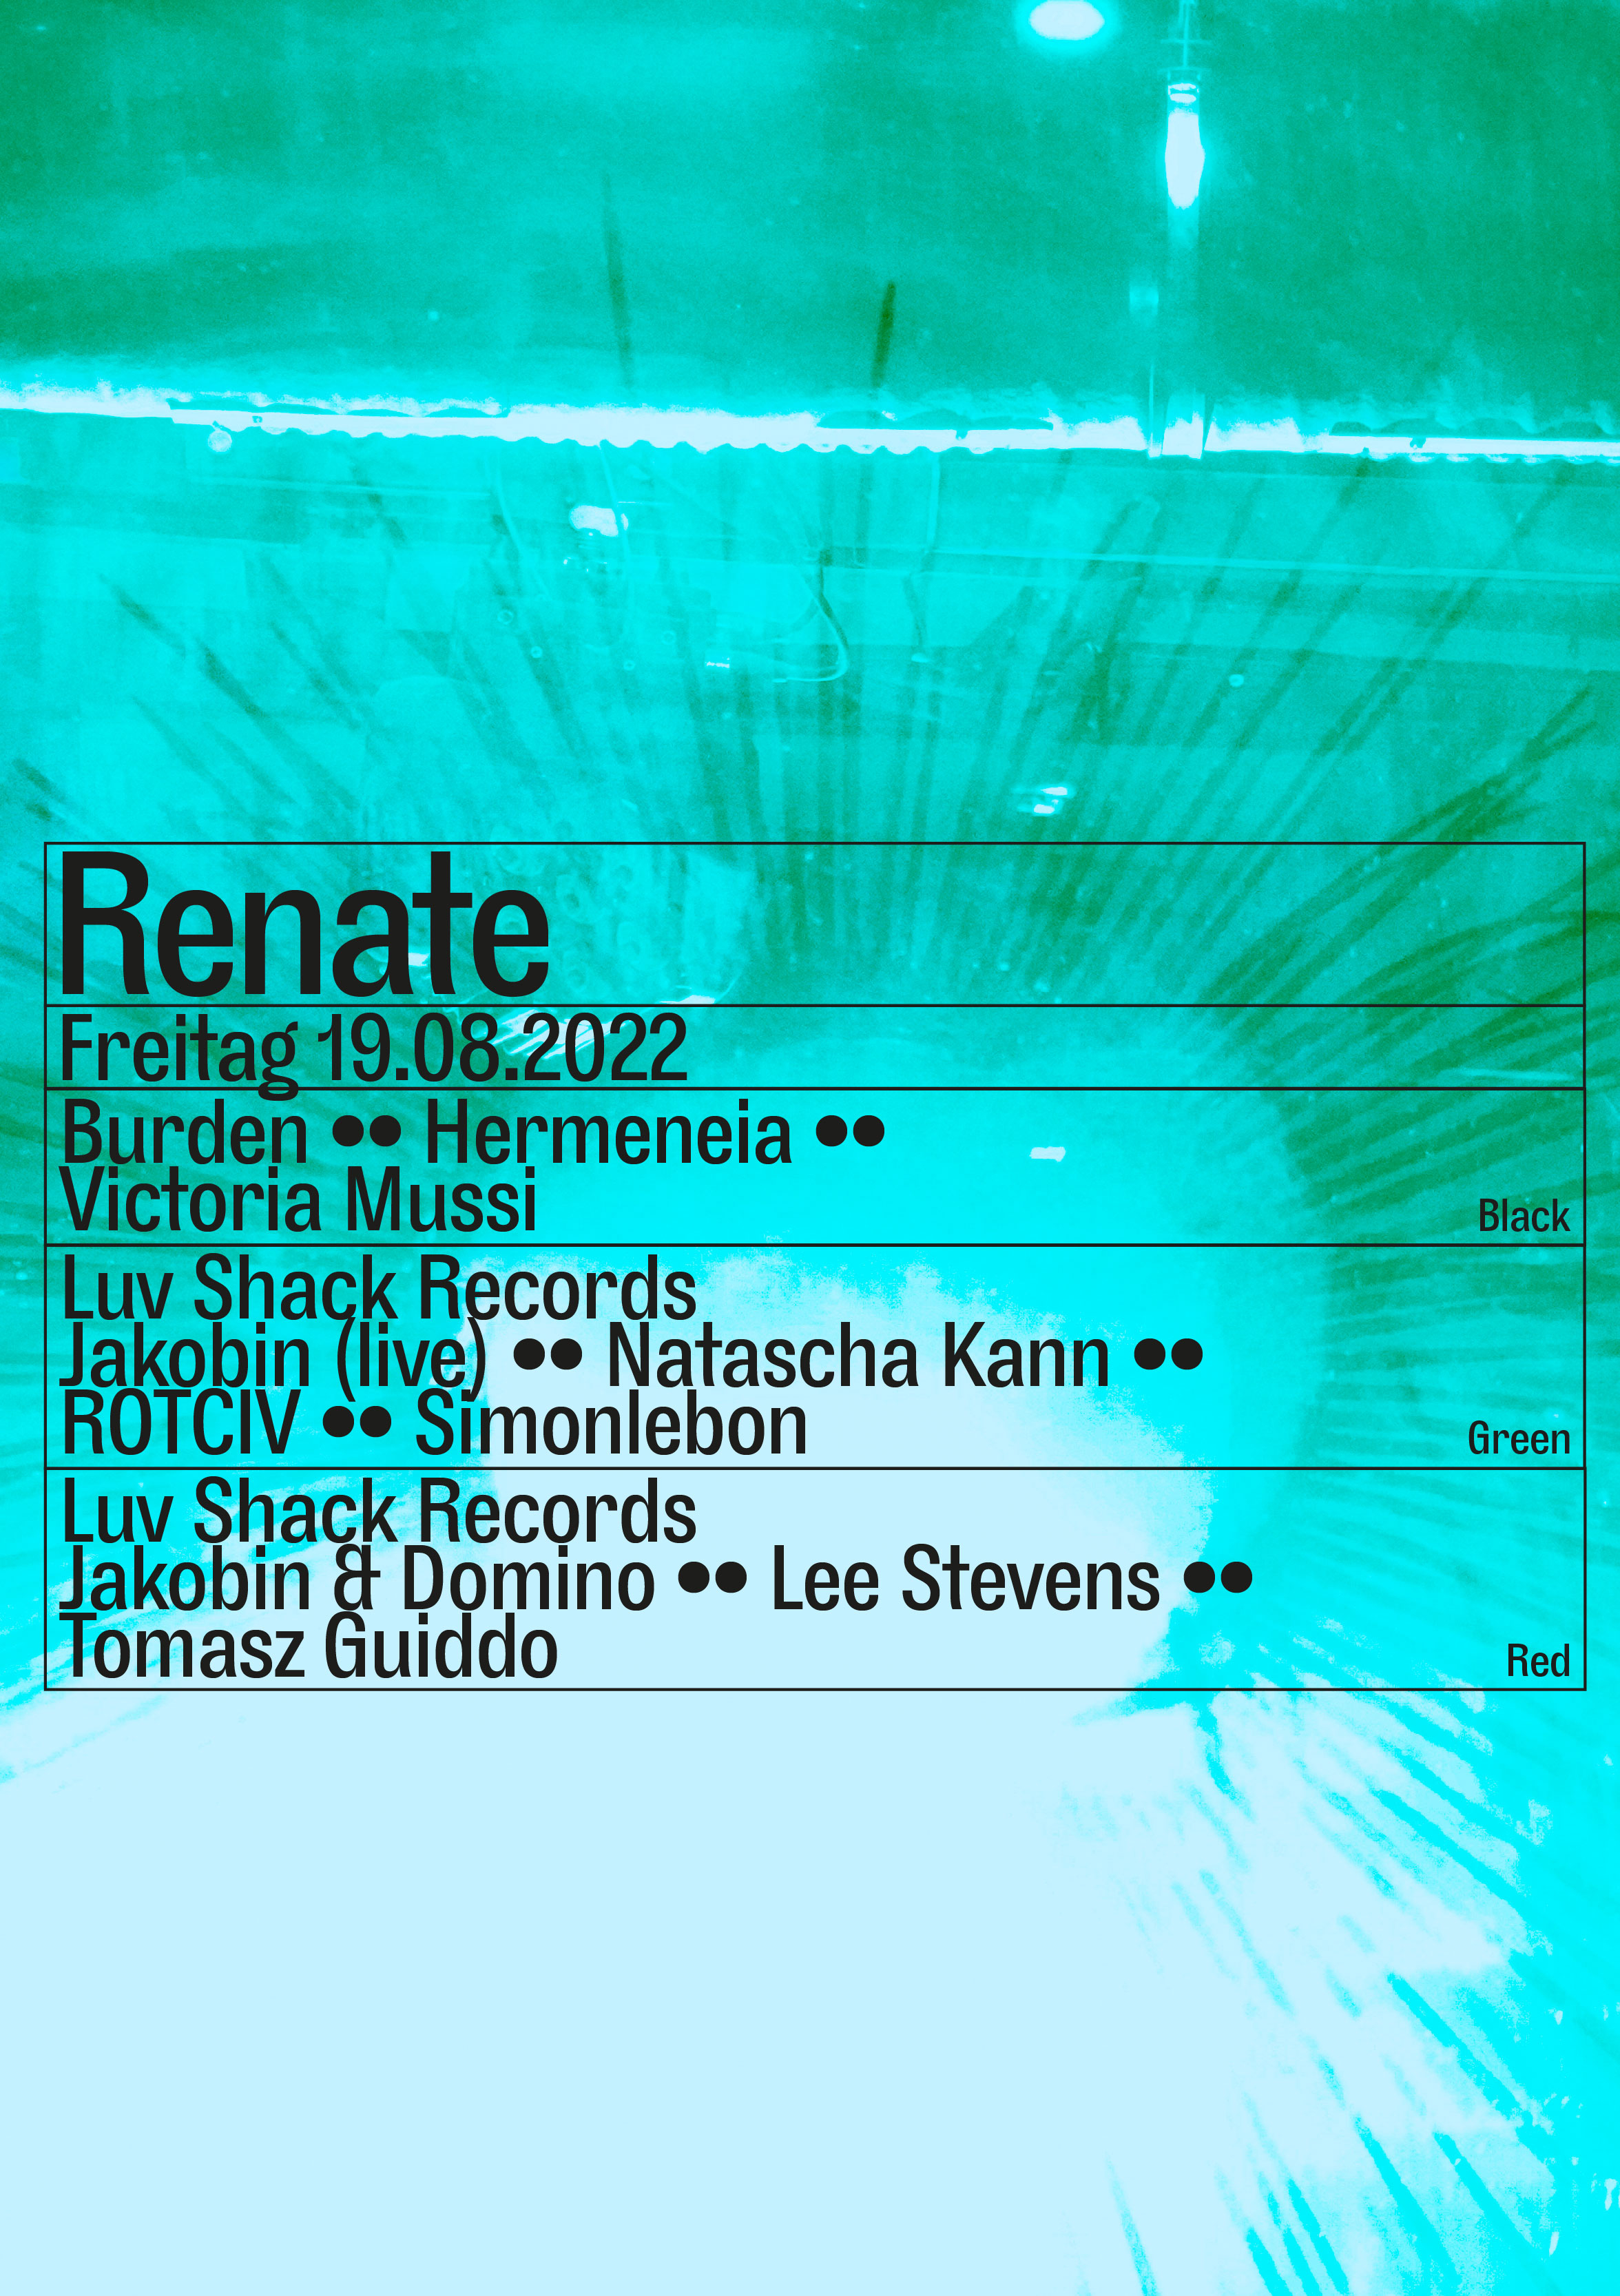 Renate with Hermeneia, Jakobin & Domino, Rotciv, Victoria Mussi - Flyer front